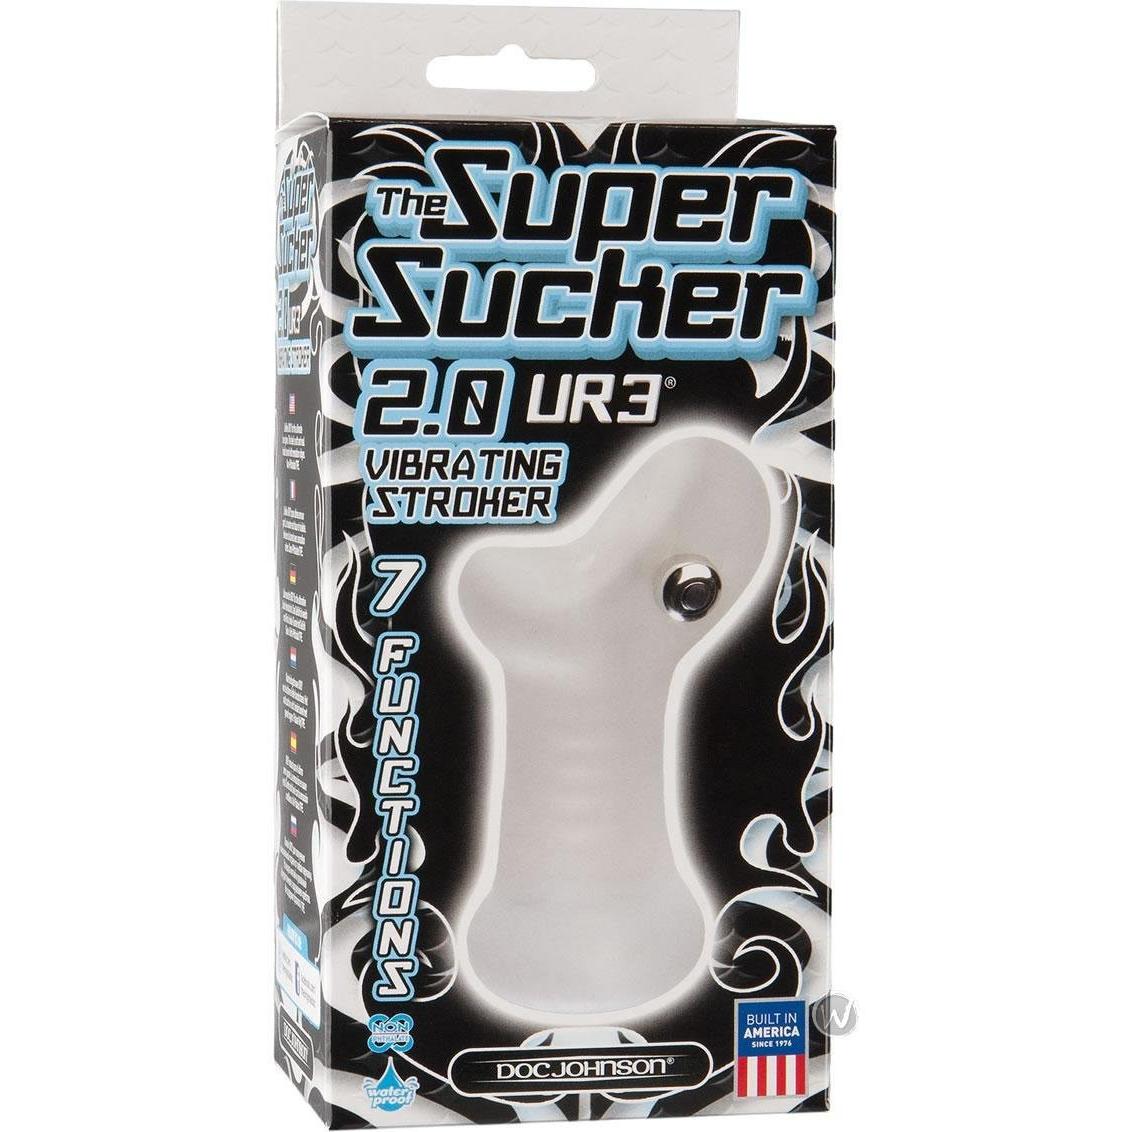 Super Sucker UR3 + Free Vibe